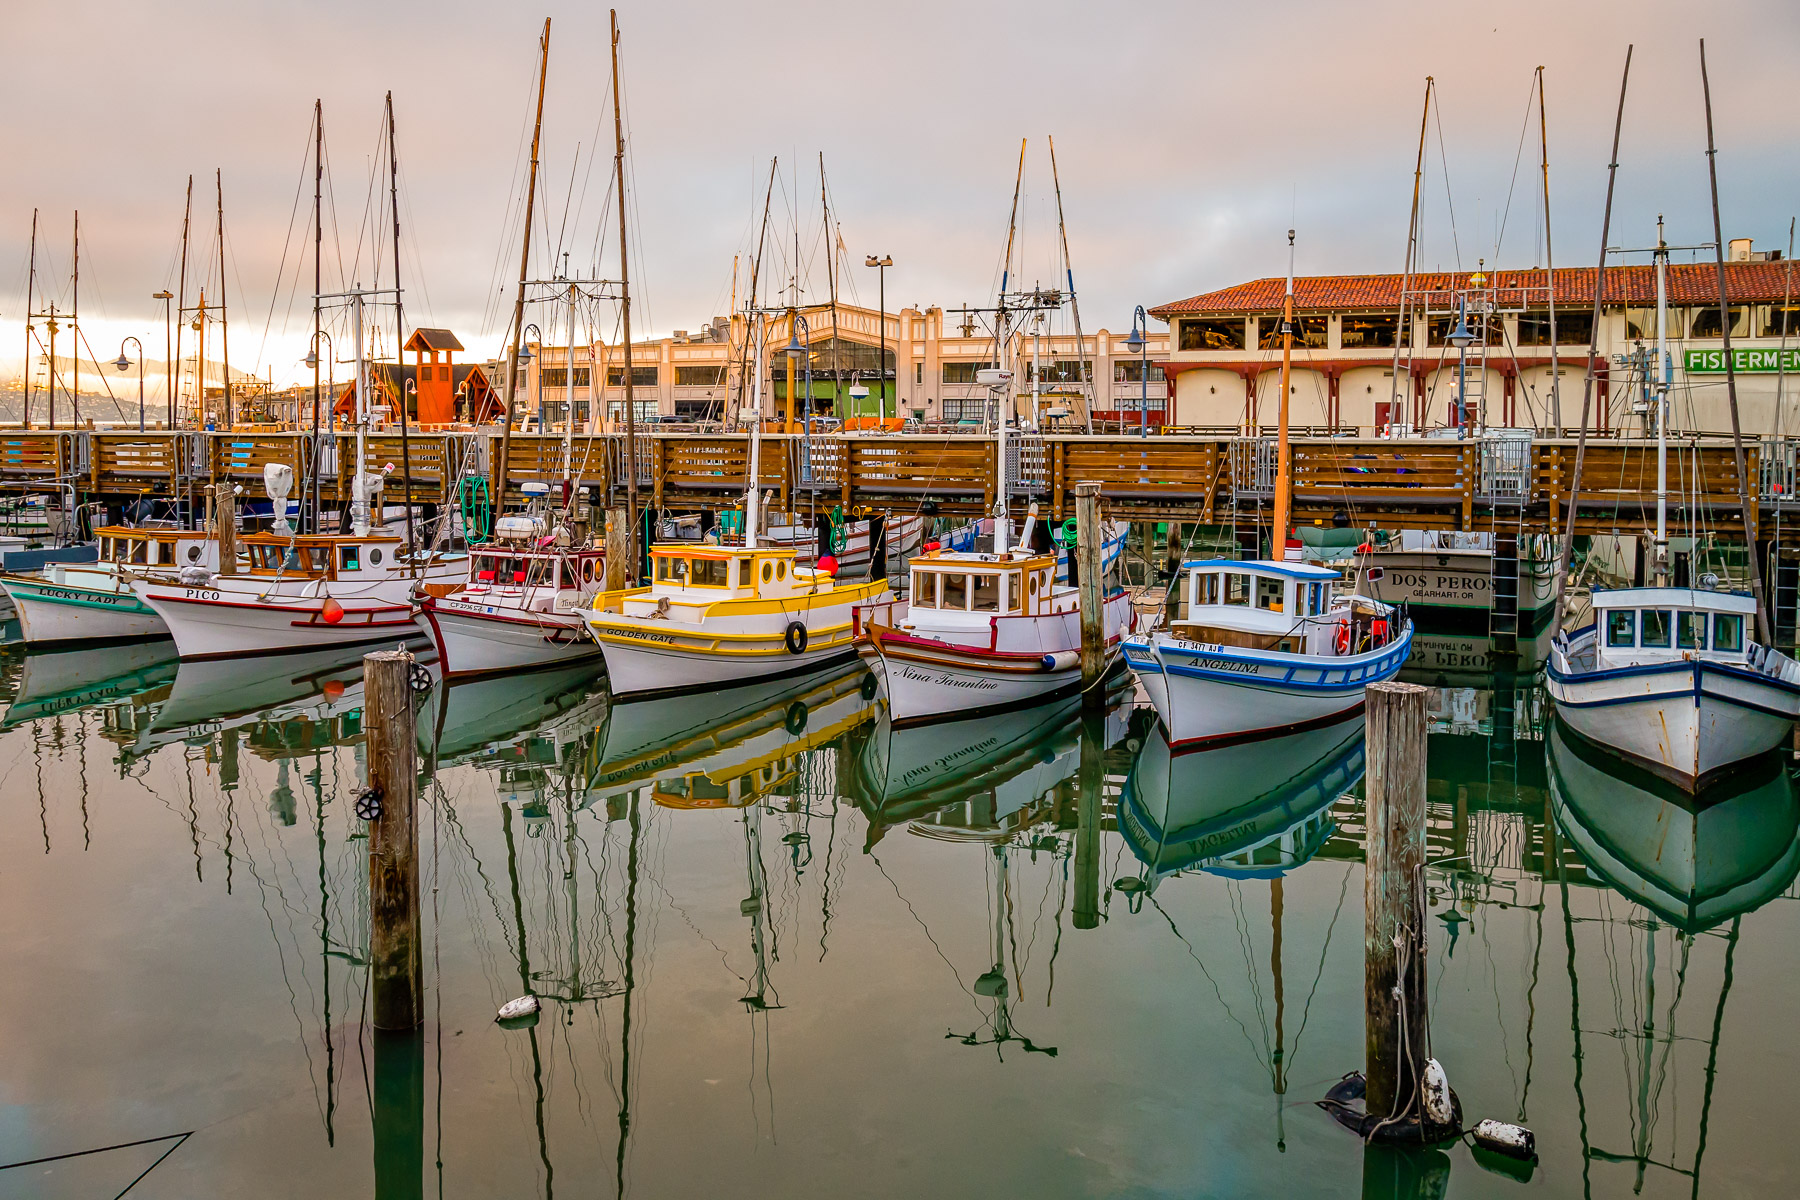 The Docked Boats | San Francisco | 75CentralPhotography